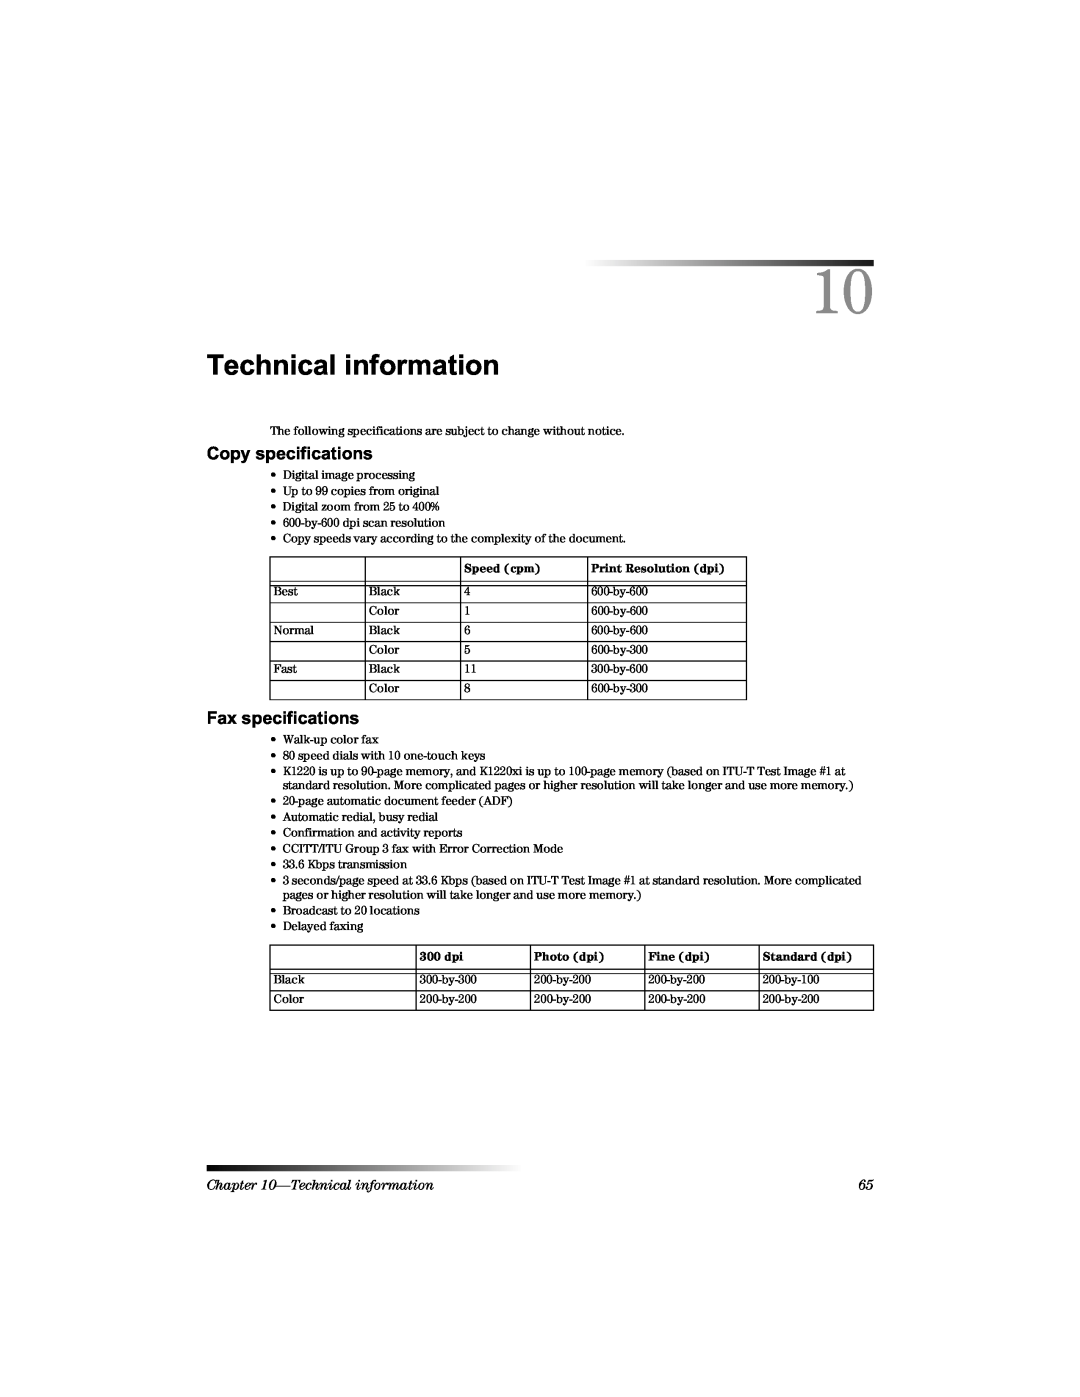 HP 1220 Fax manual 7HFKQLFDOLQIRUPDWLRQ, Rs\Vshflilfdwlrqv, Dvshflilfdwlrqv, Technical information 